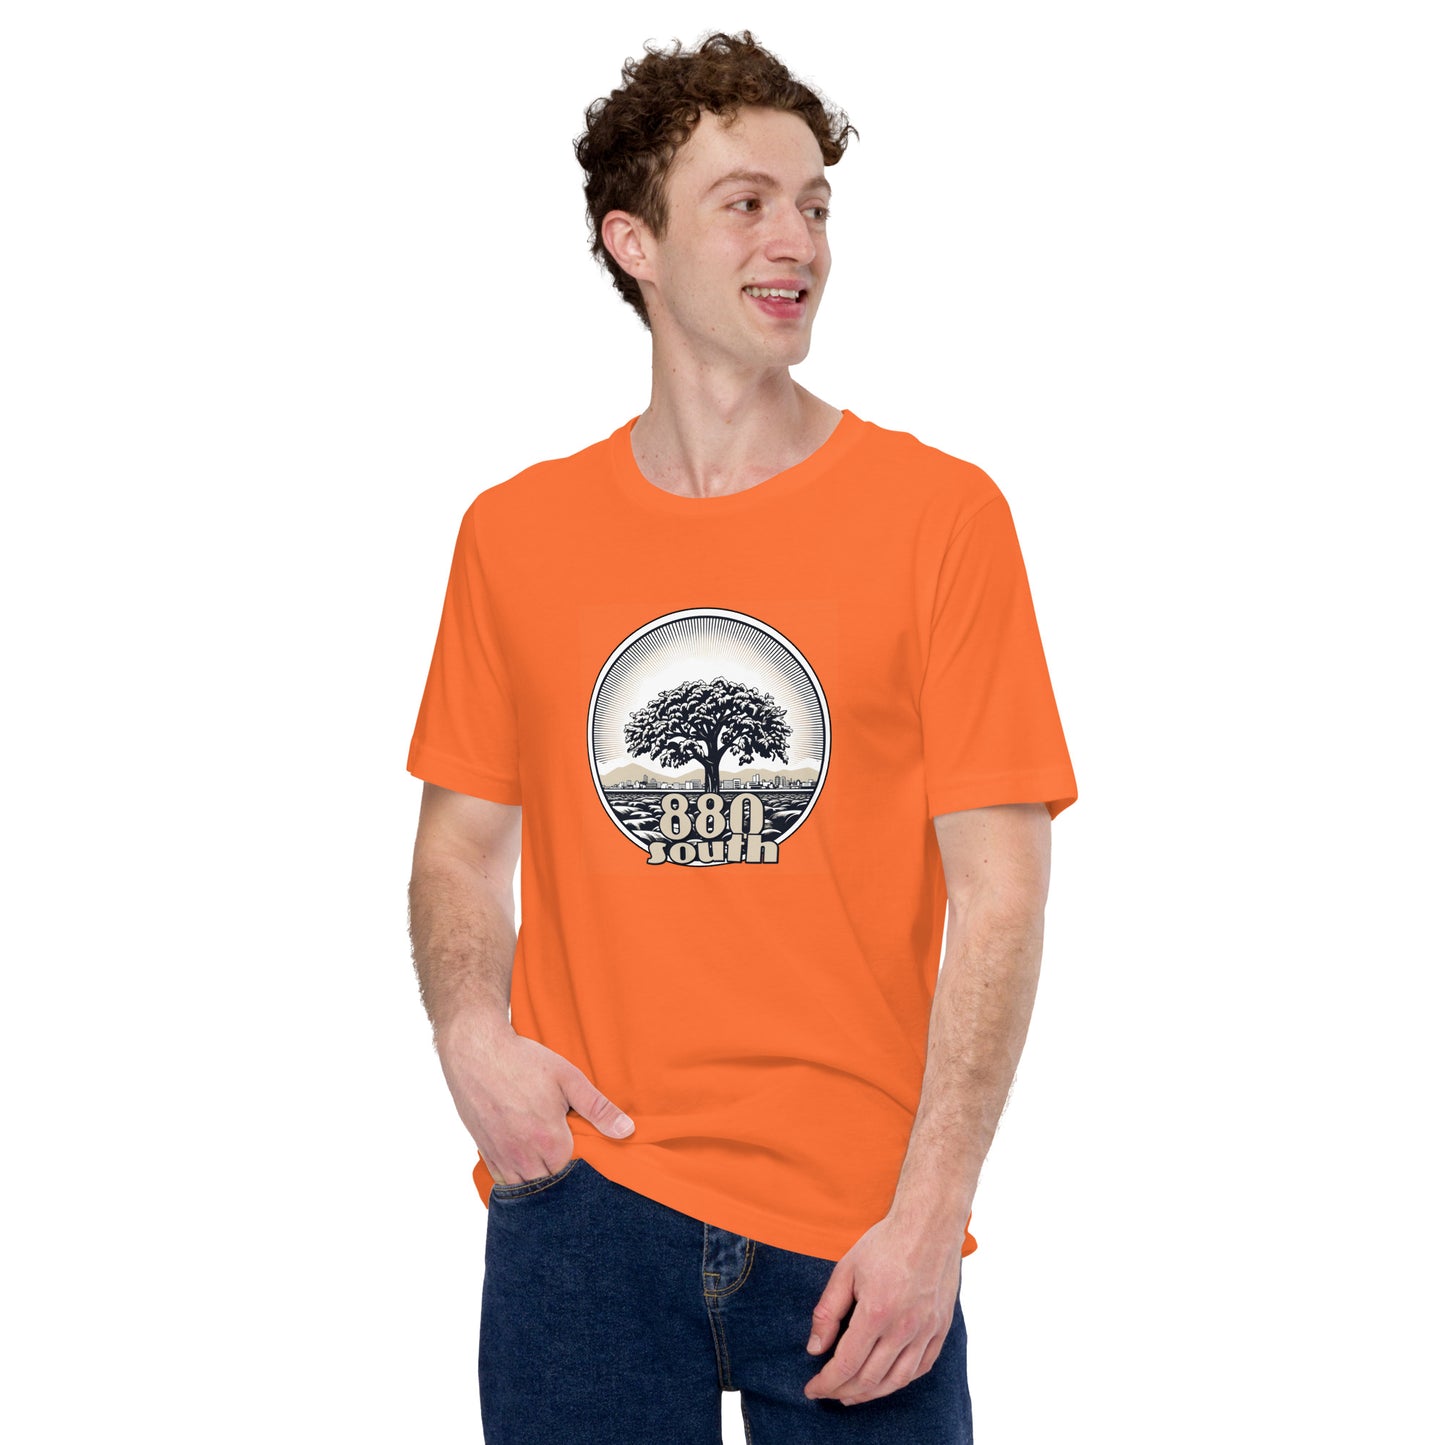 880 South Orchard City - Unisex t-shirt